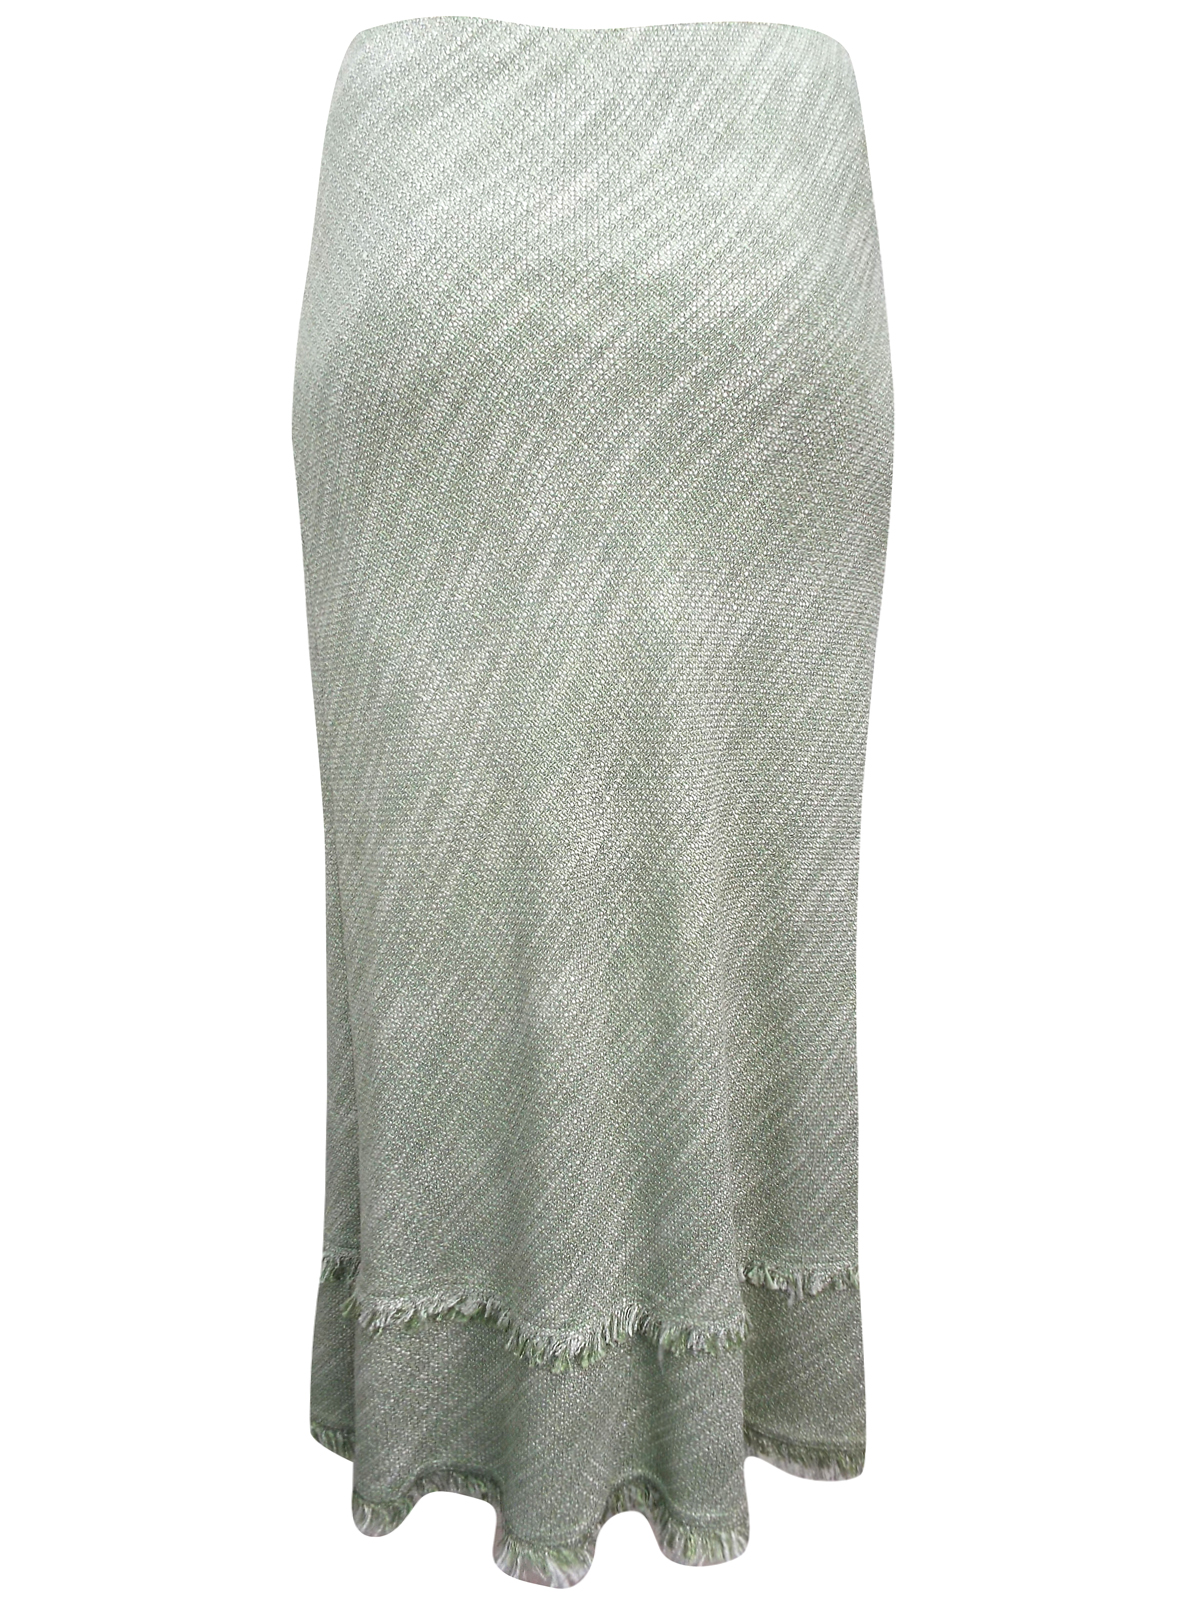 3vans GREEN Fringe Trim Tweed 39in Maxi Skirt - Plus Size 16 to 30